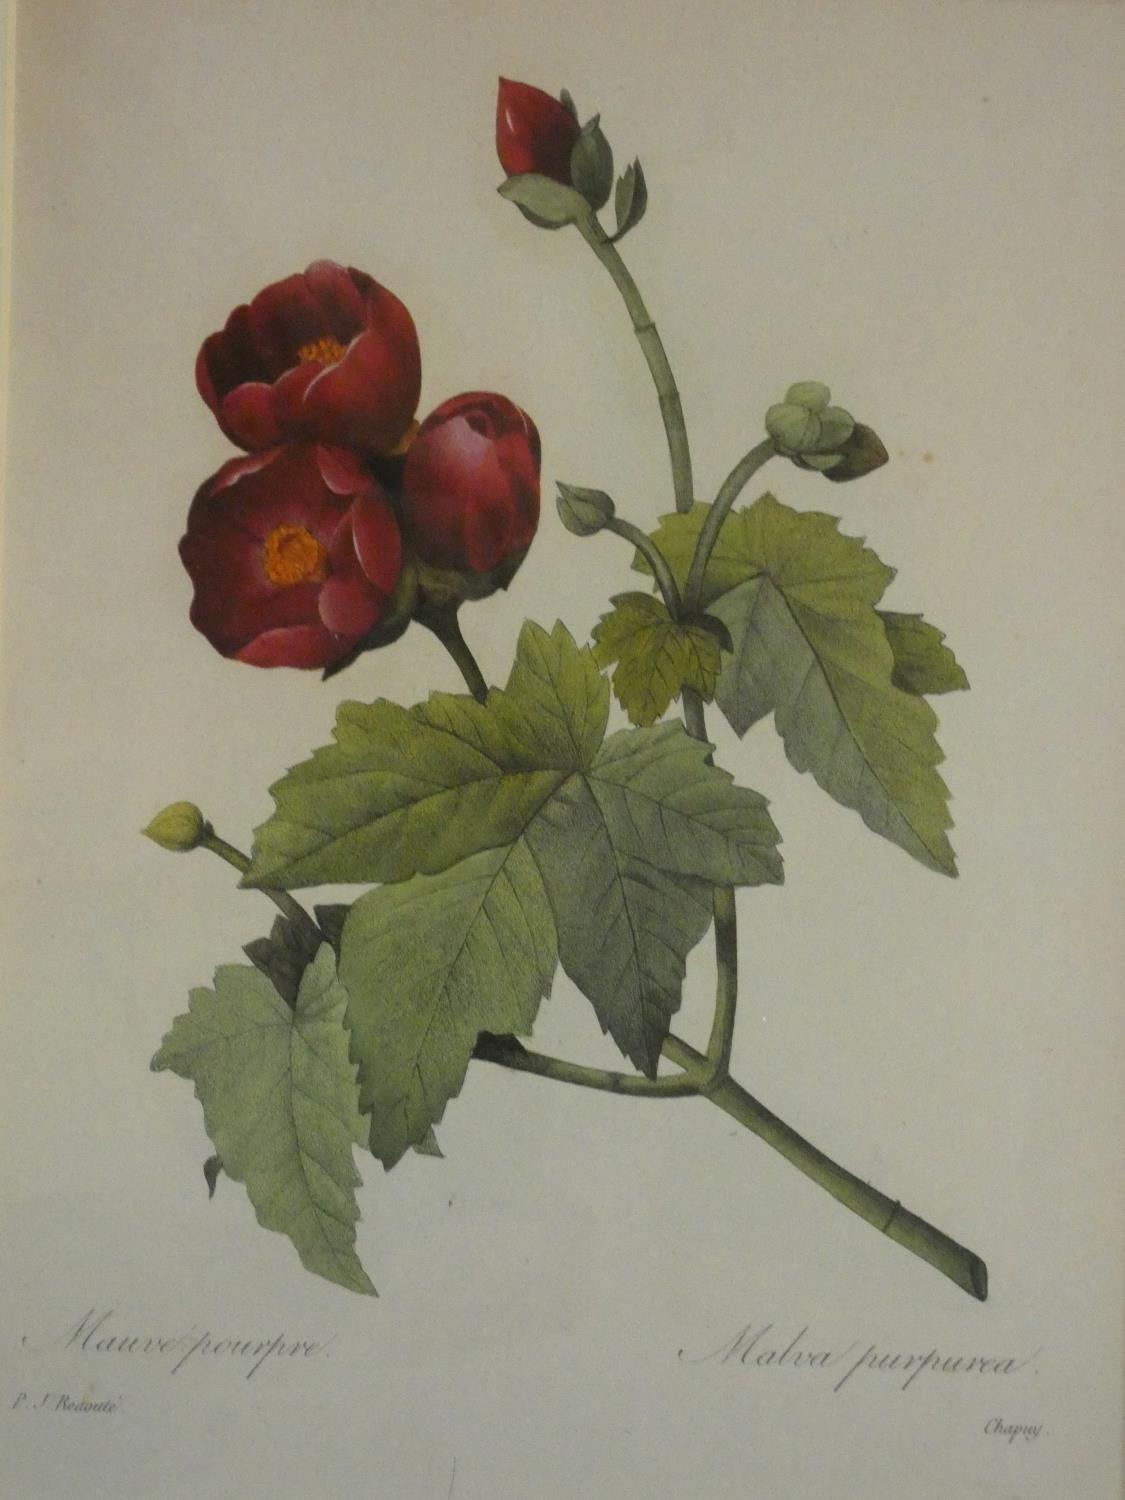 Two framed and glazed vintage botanical prints, each with four floral book plate illustration prints - Image 9 of 11